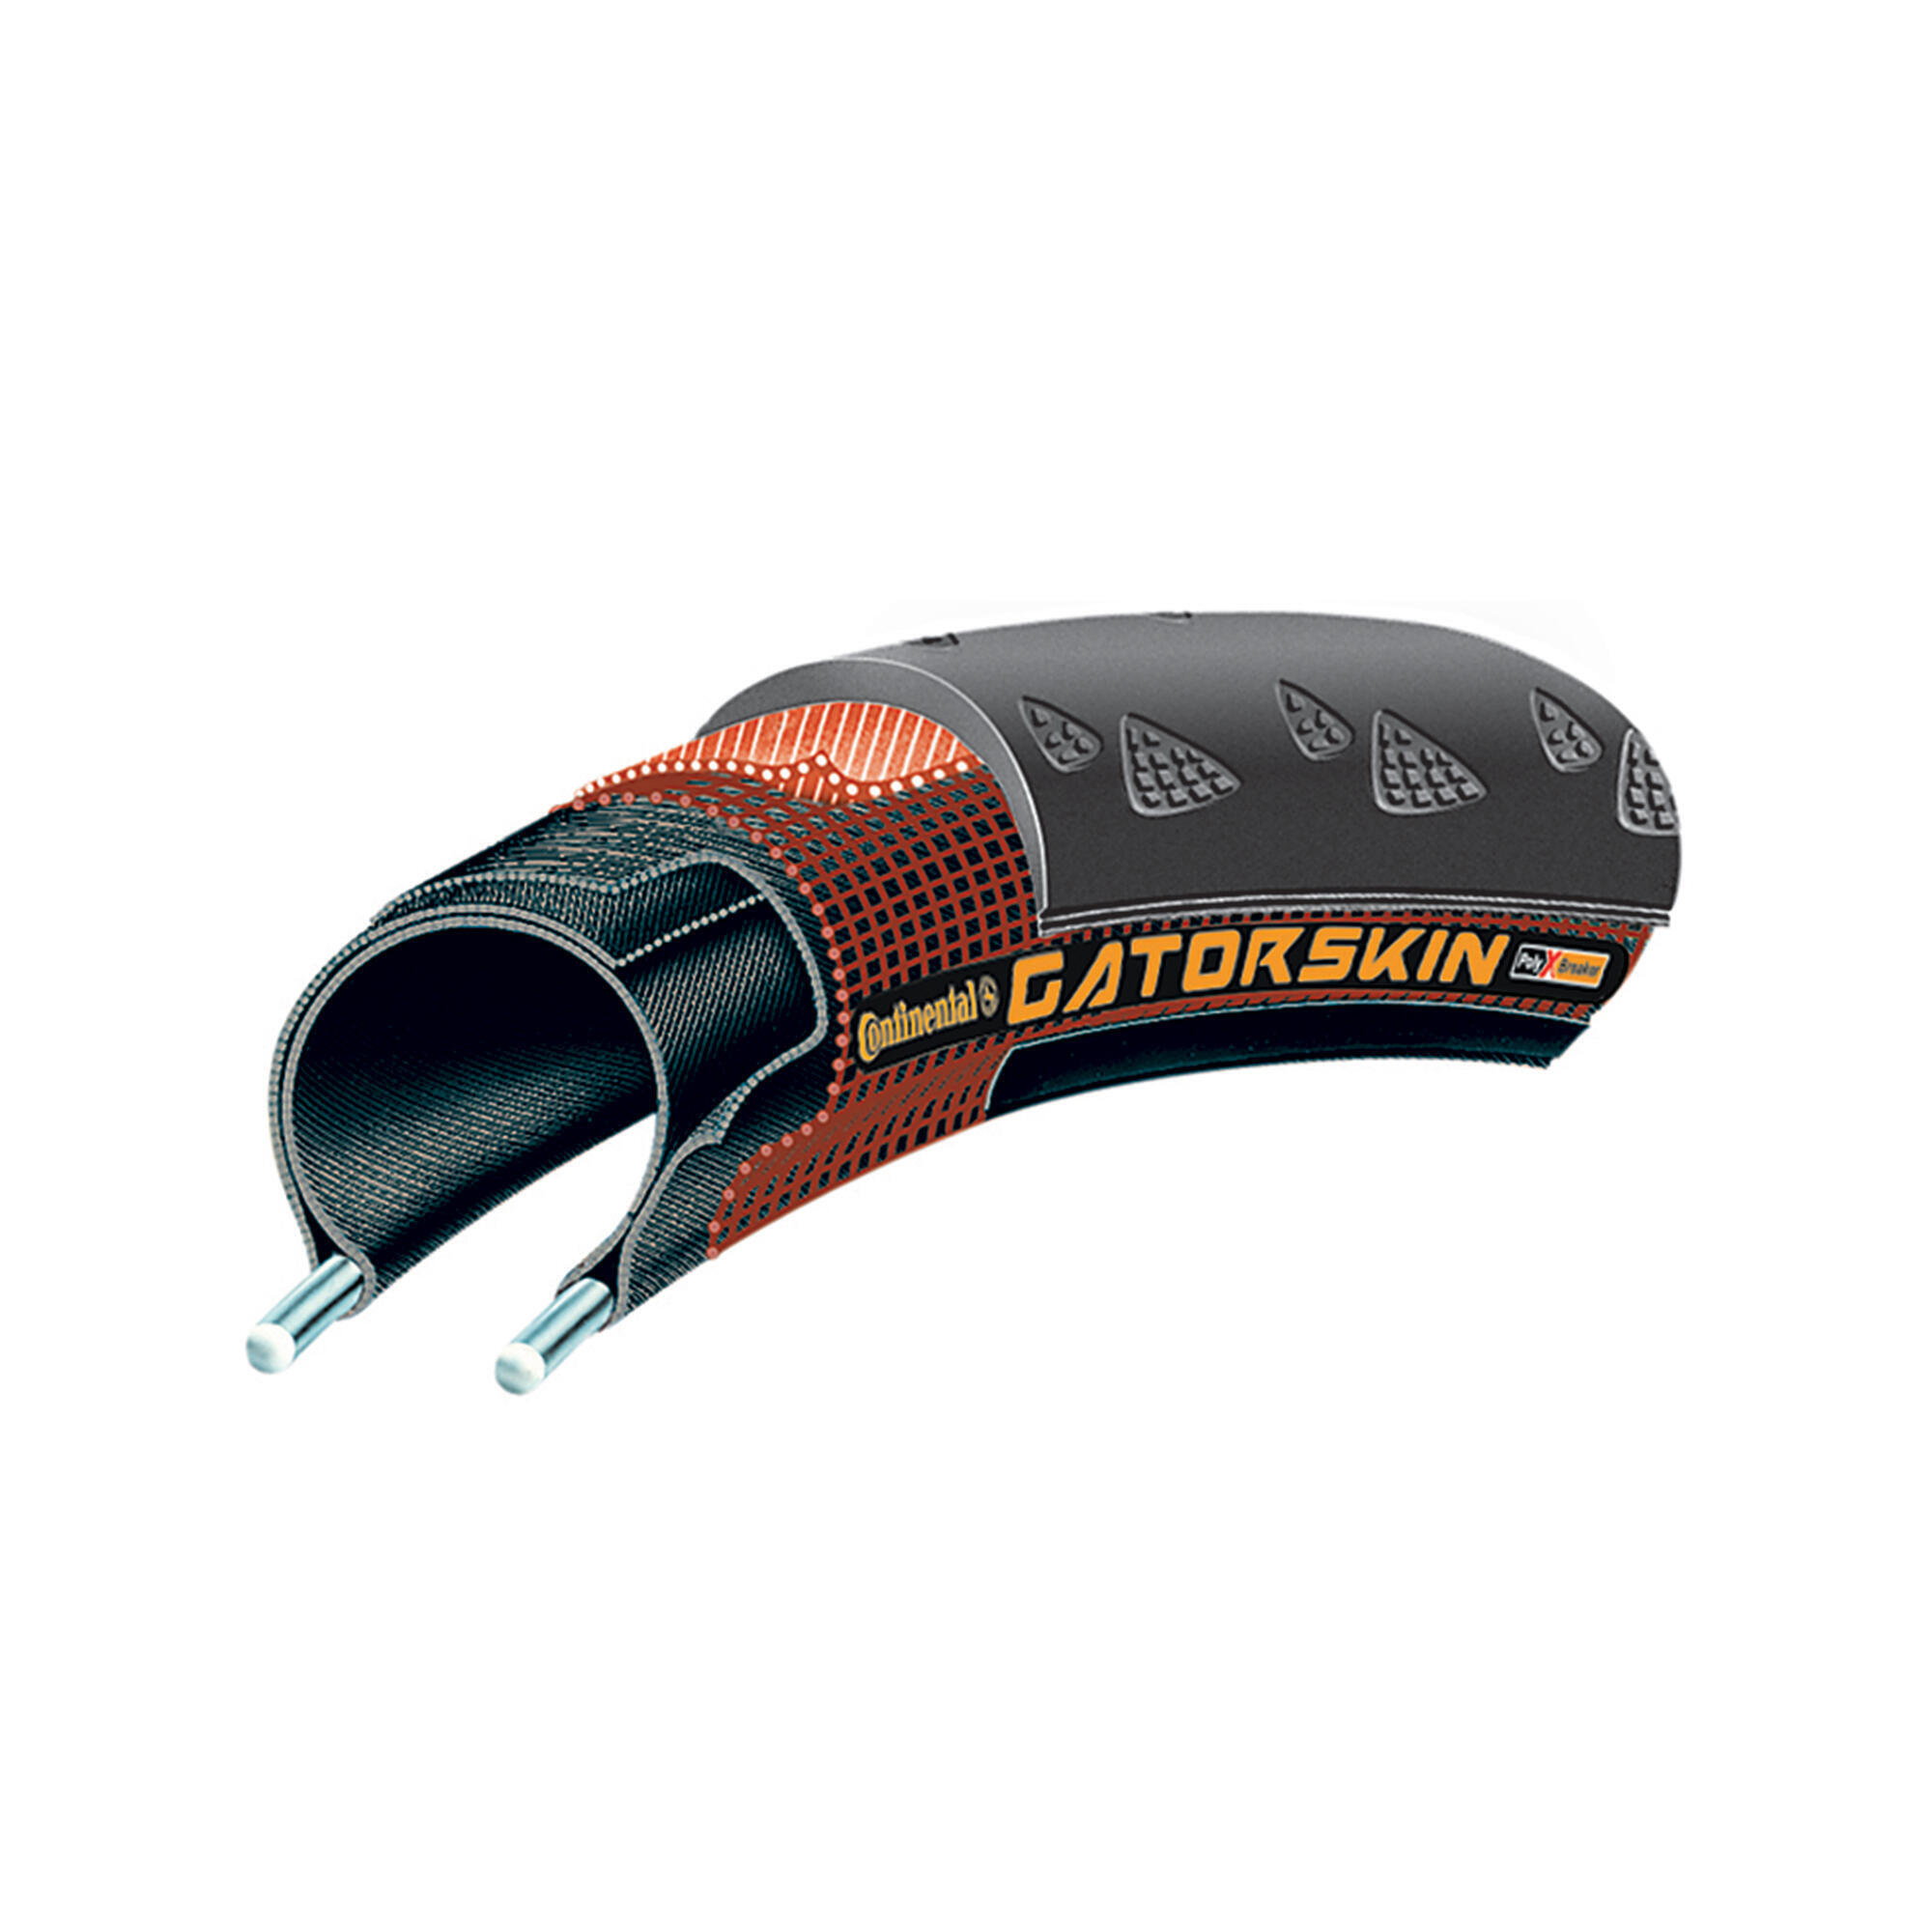 Gatorskin Wire Road Bike Tyre 700x28 2/3